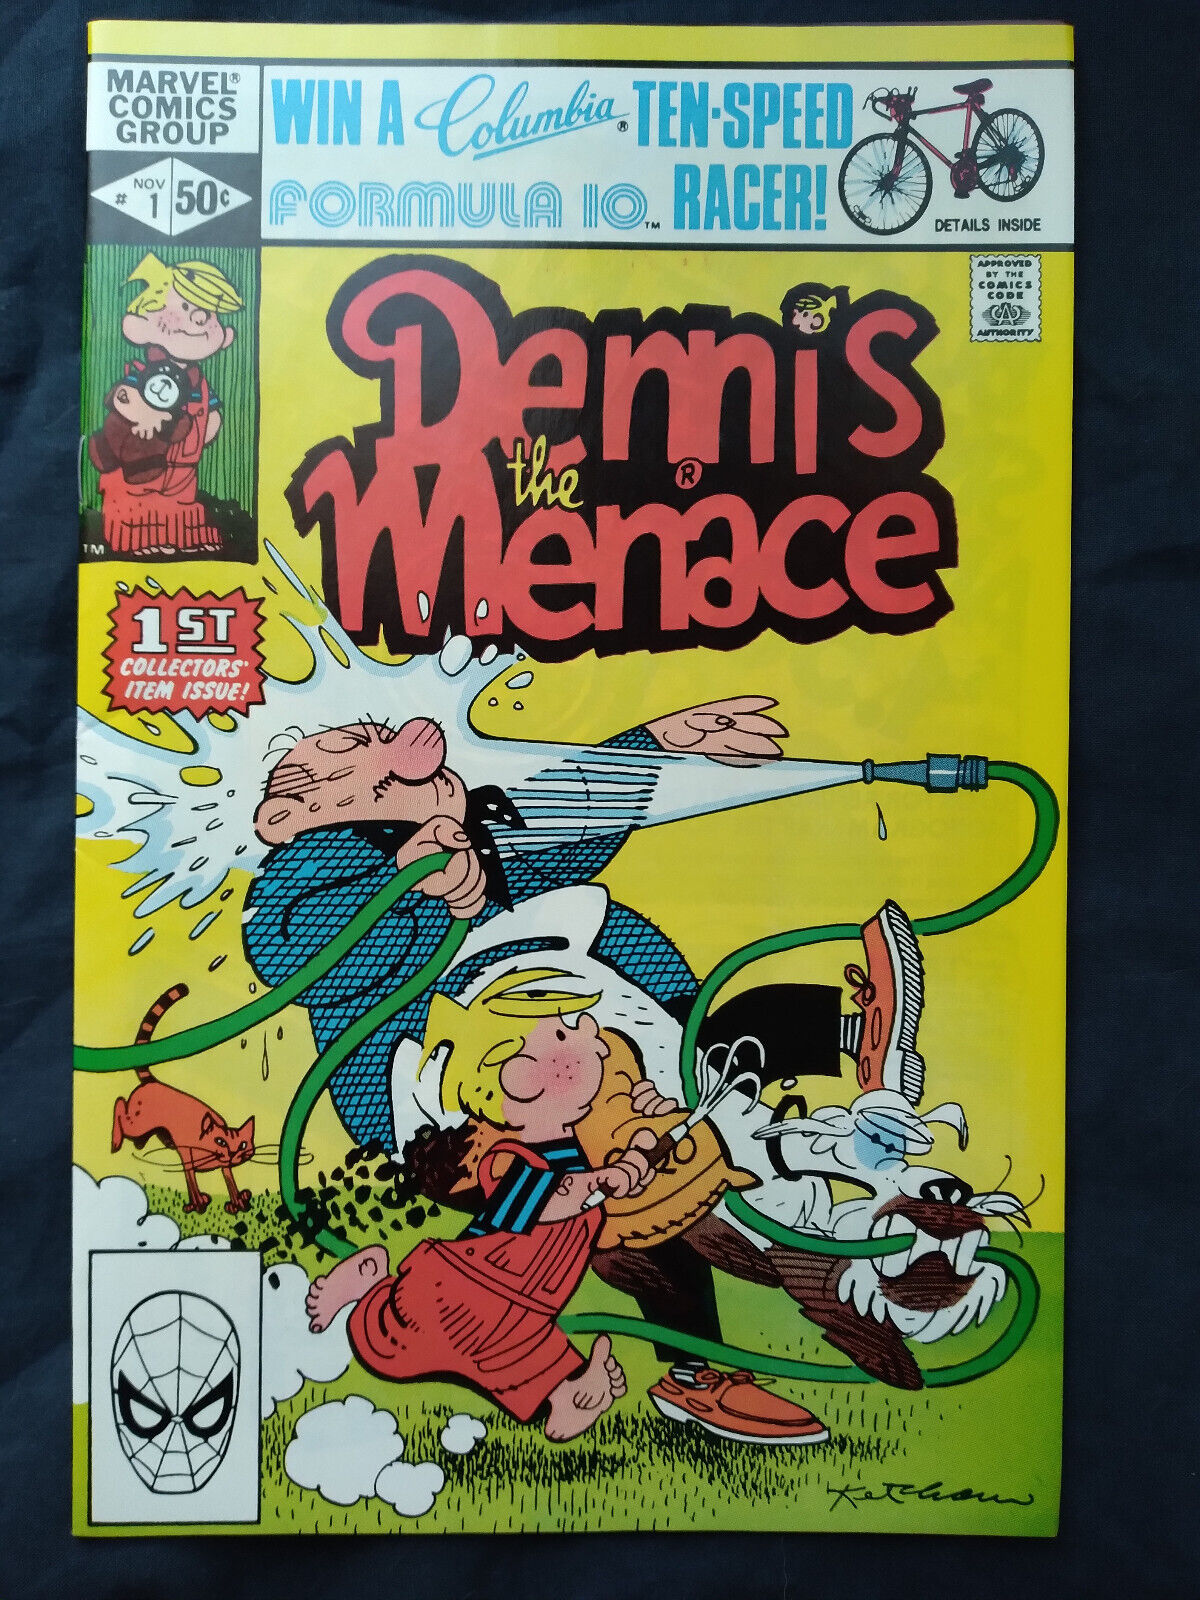 DENNIS THE MENACE #1 MARVEL COMICS 1982 UNREAD ONE OWNER NM 9.4